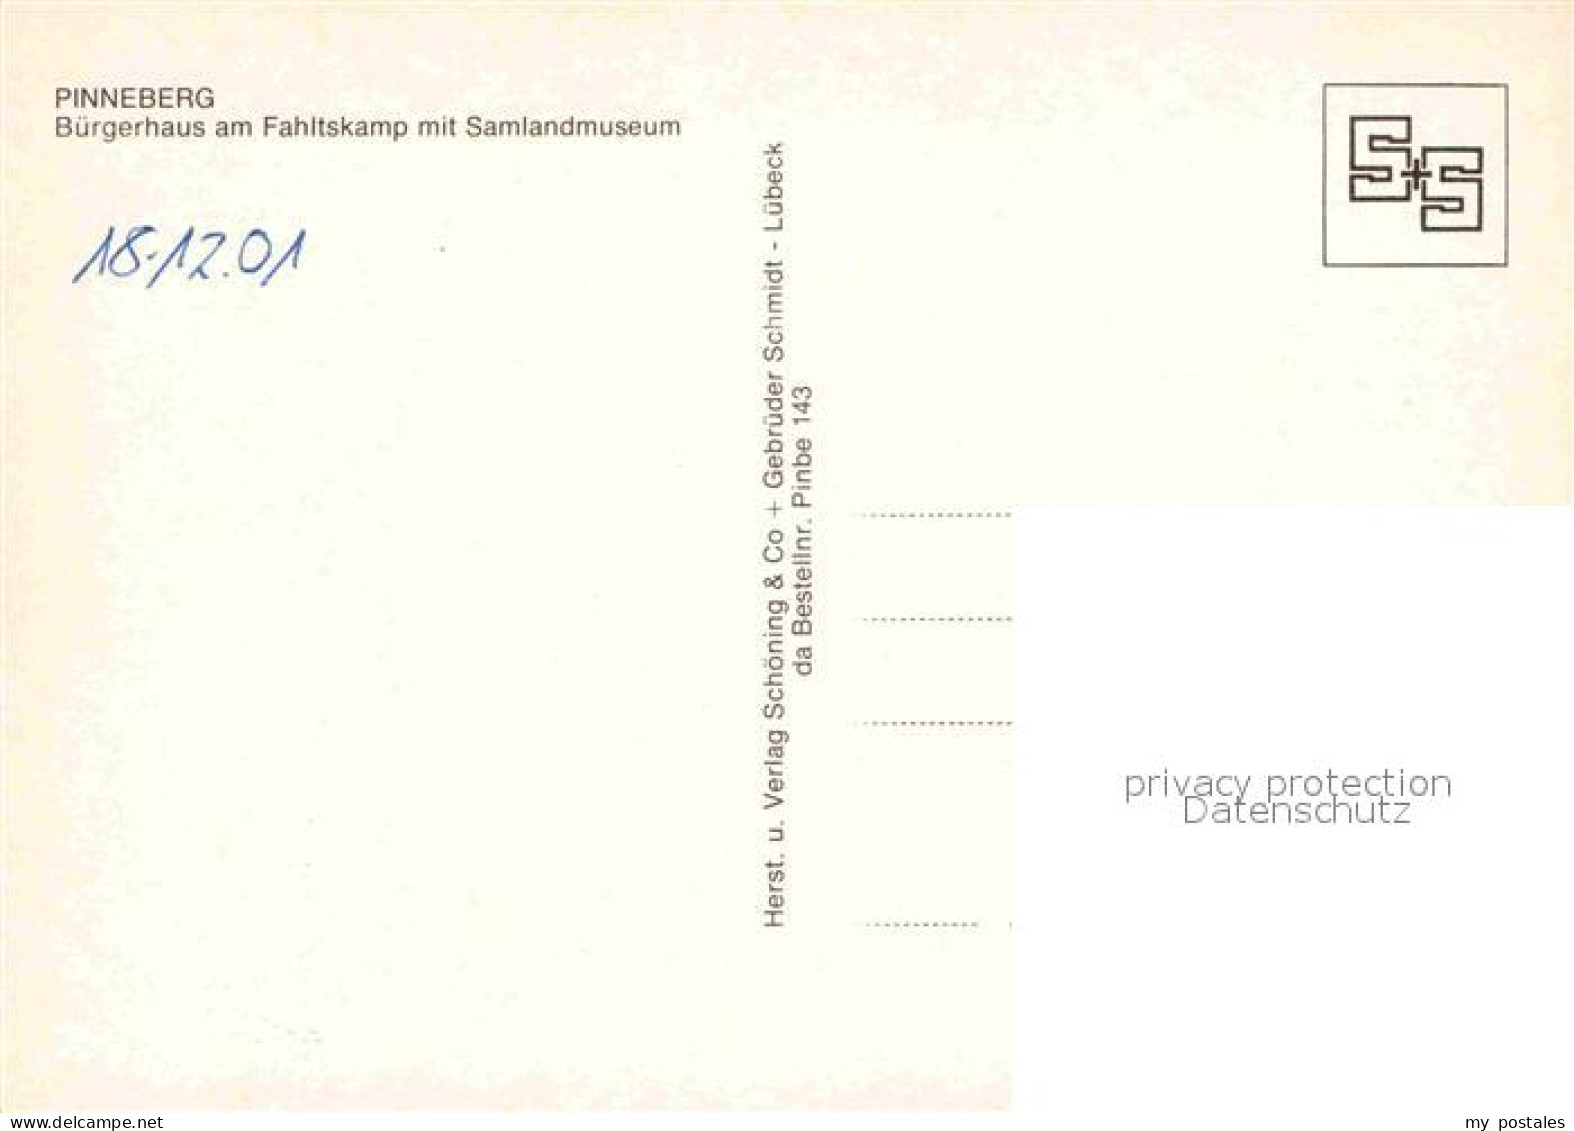 72866685 Pinneberg Buergerhaus Fahltskamp Samlandmuseum Pinneberg - Pinneberg